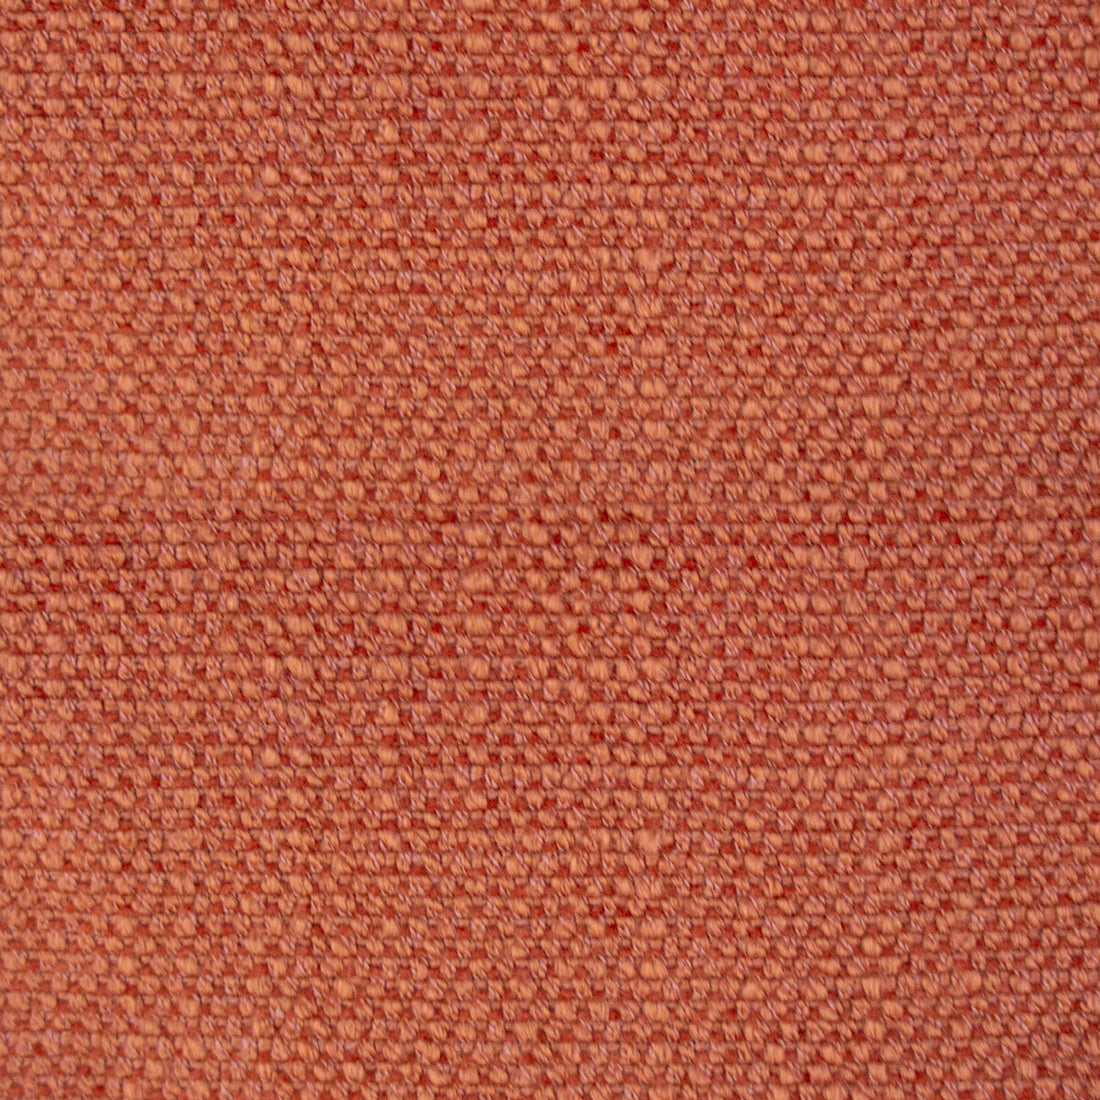 Hugo fabric in naranja color - pattern LCT1053.018.0 - by Gaston y Daniela in the Lorenzo Castillo VI collection